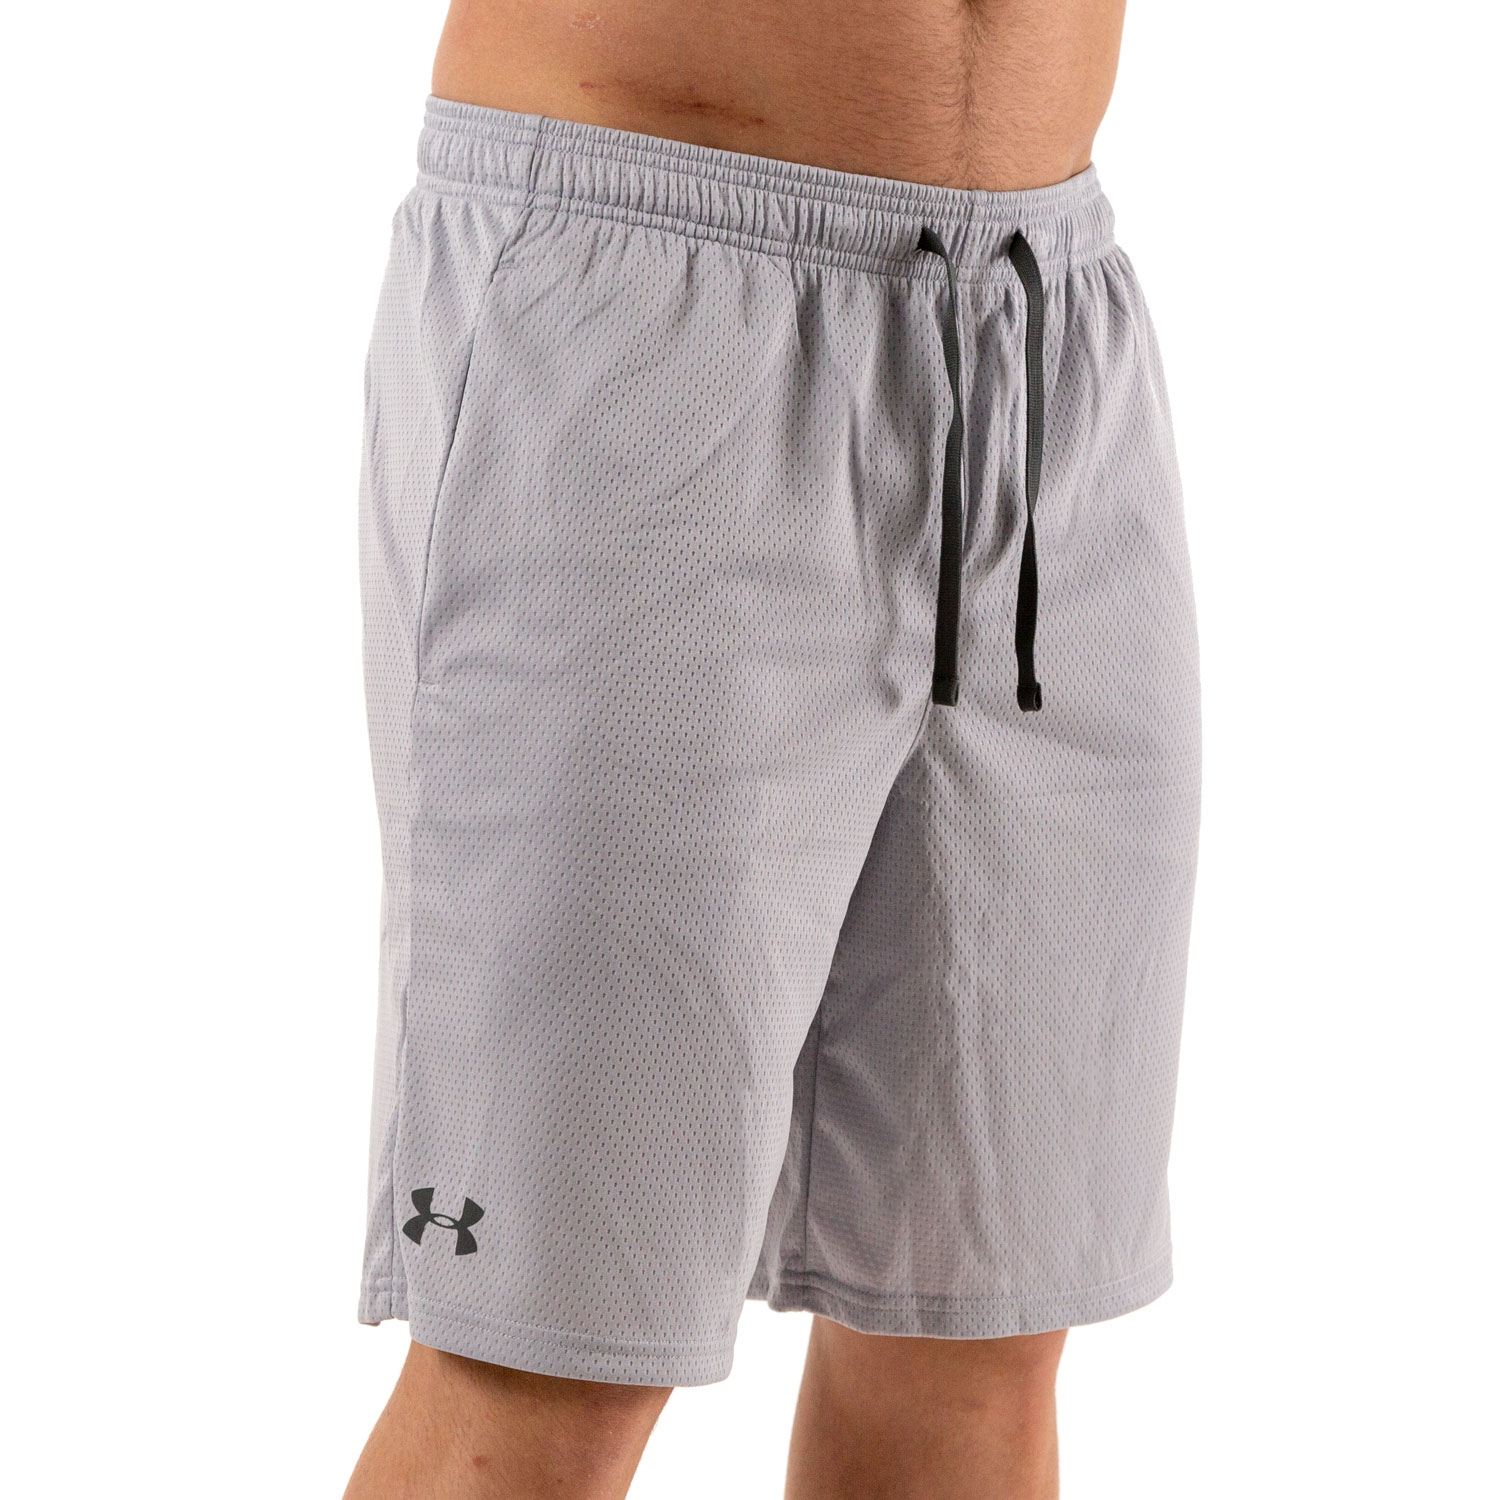 under armor tennis shorts